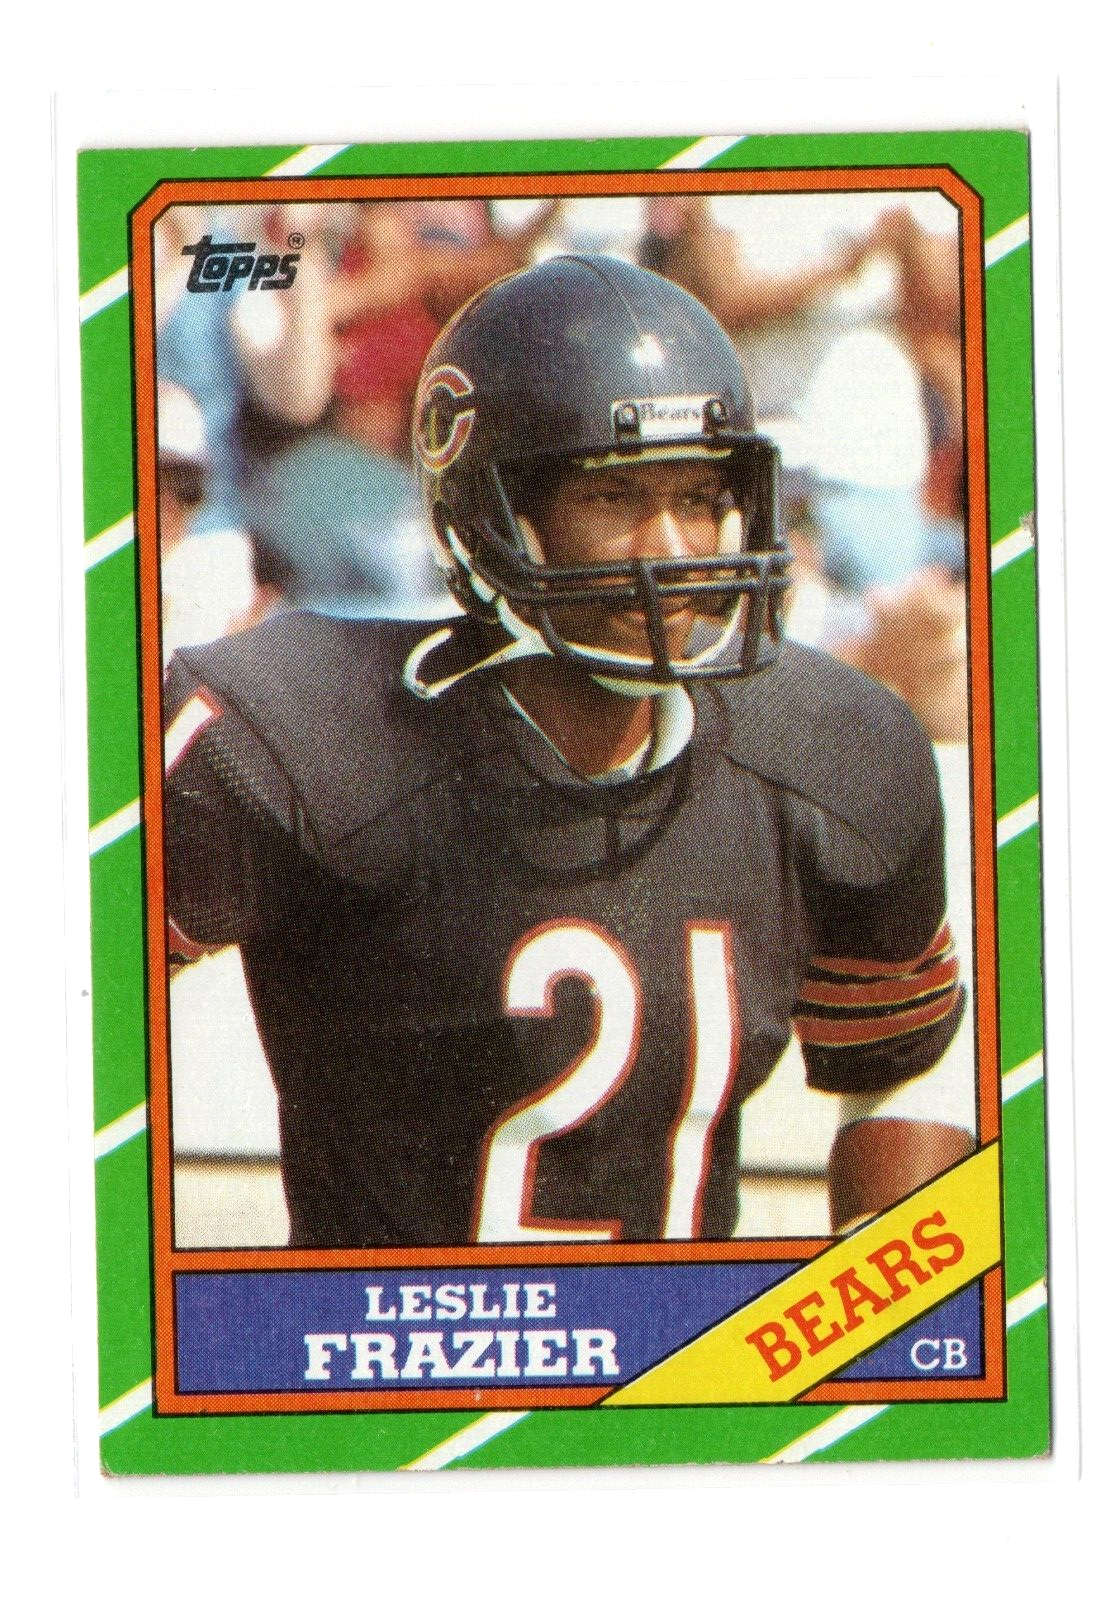 1986 Topps Football Leslie Frazier #26 NFL Card Chicago Bears Head Coach EX - $1.75